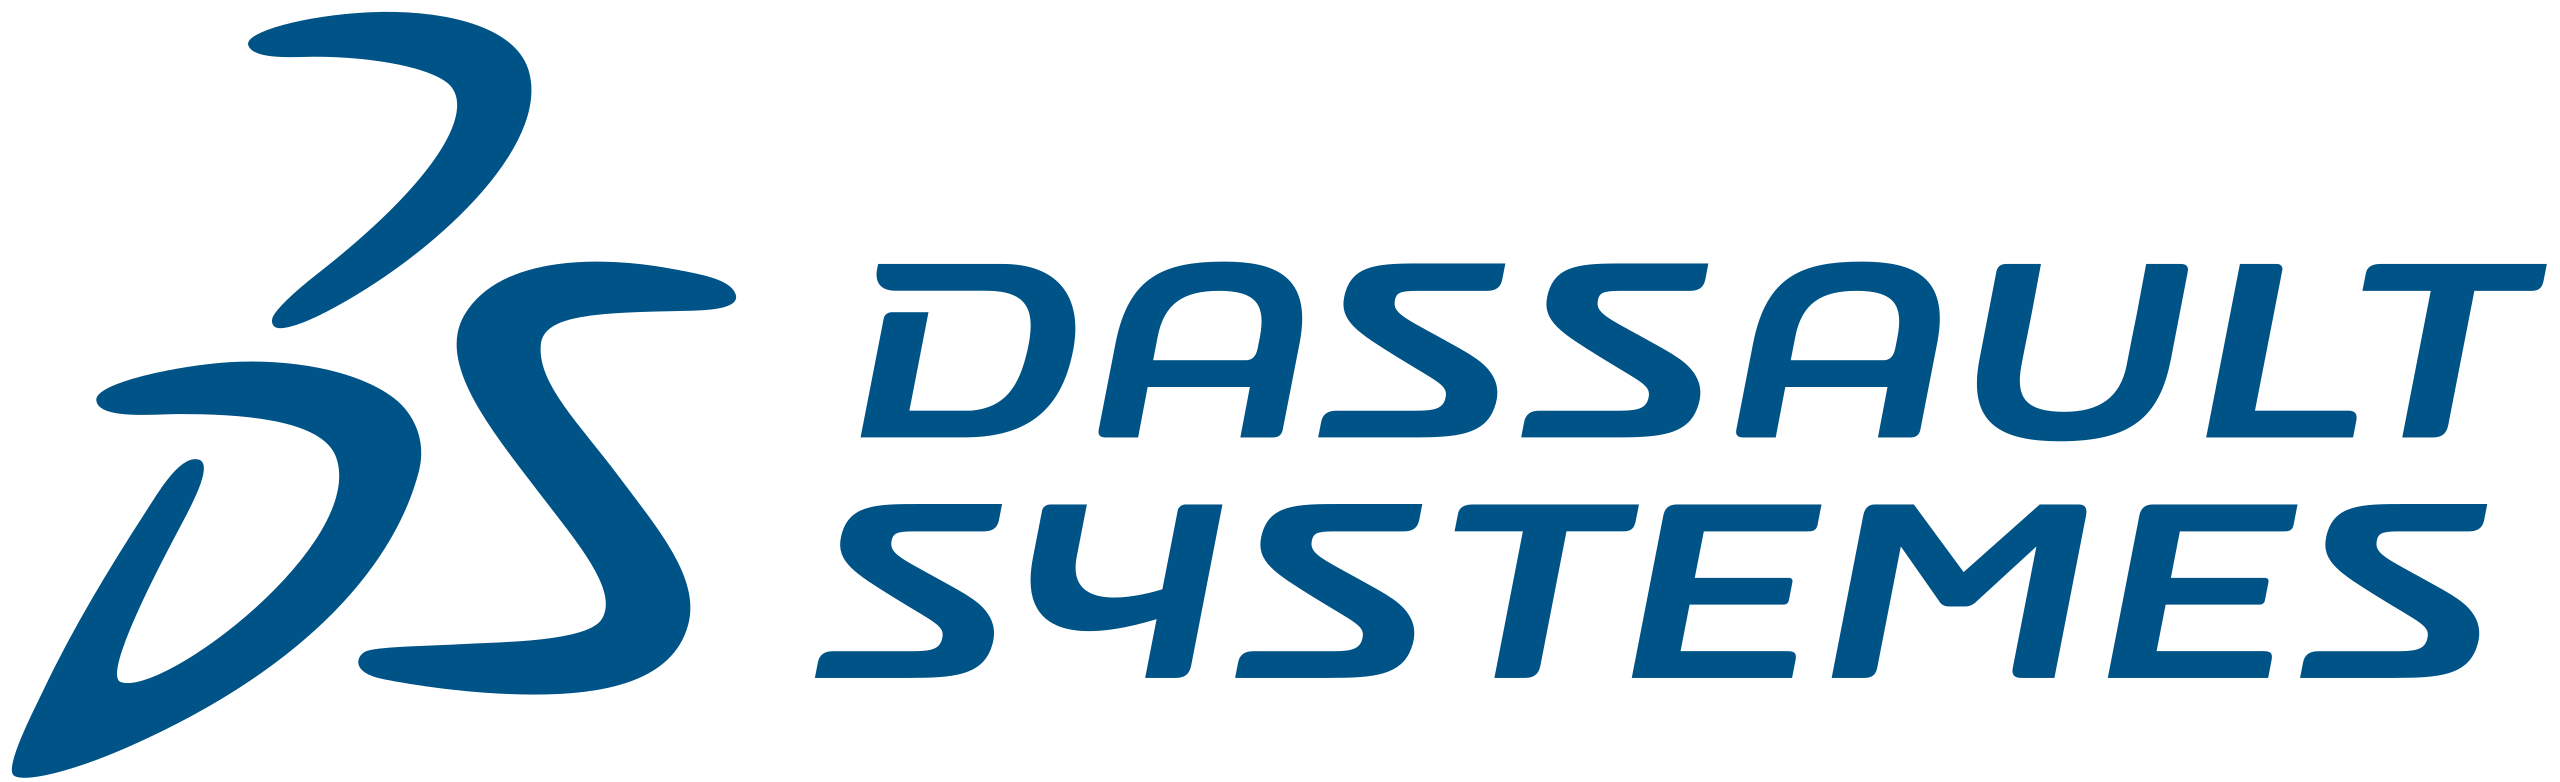 Dassaul Systemes Logo